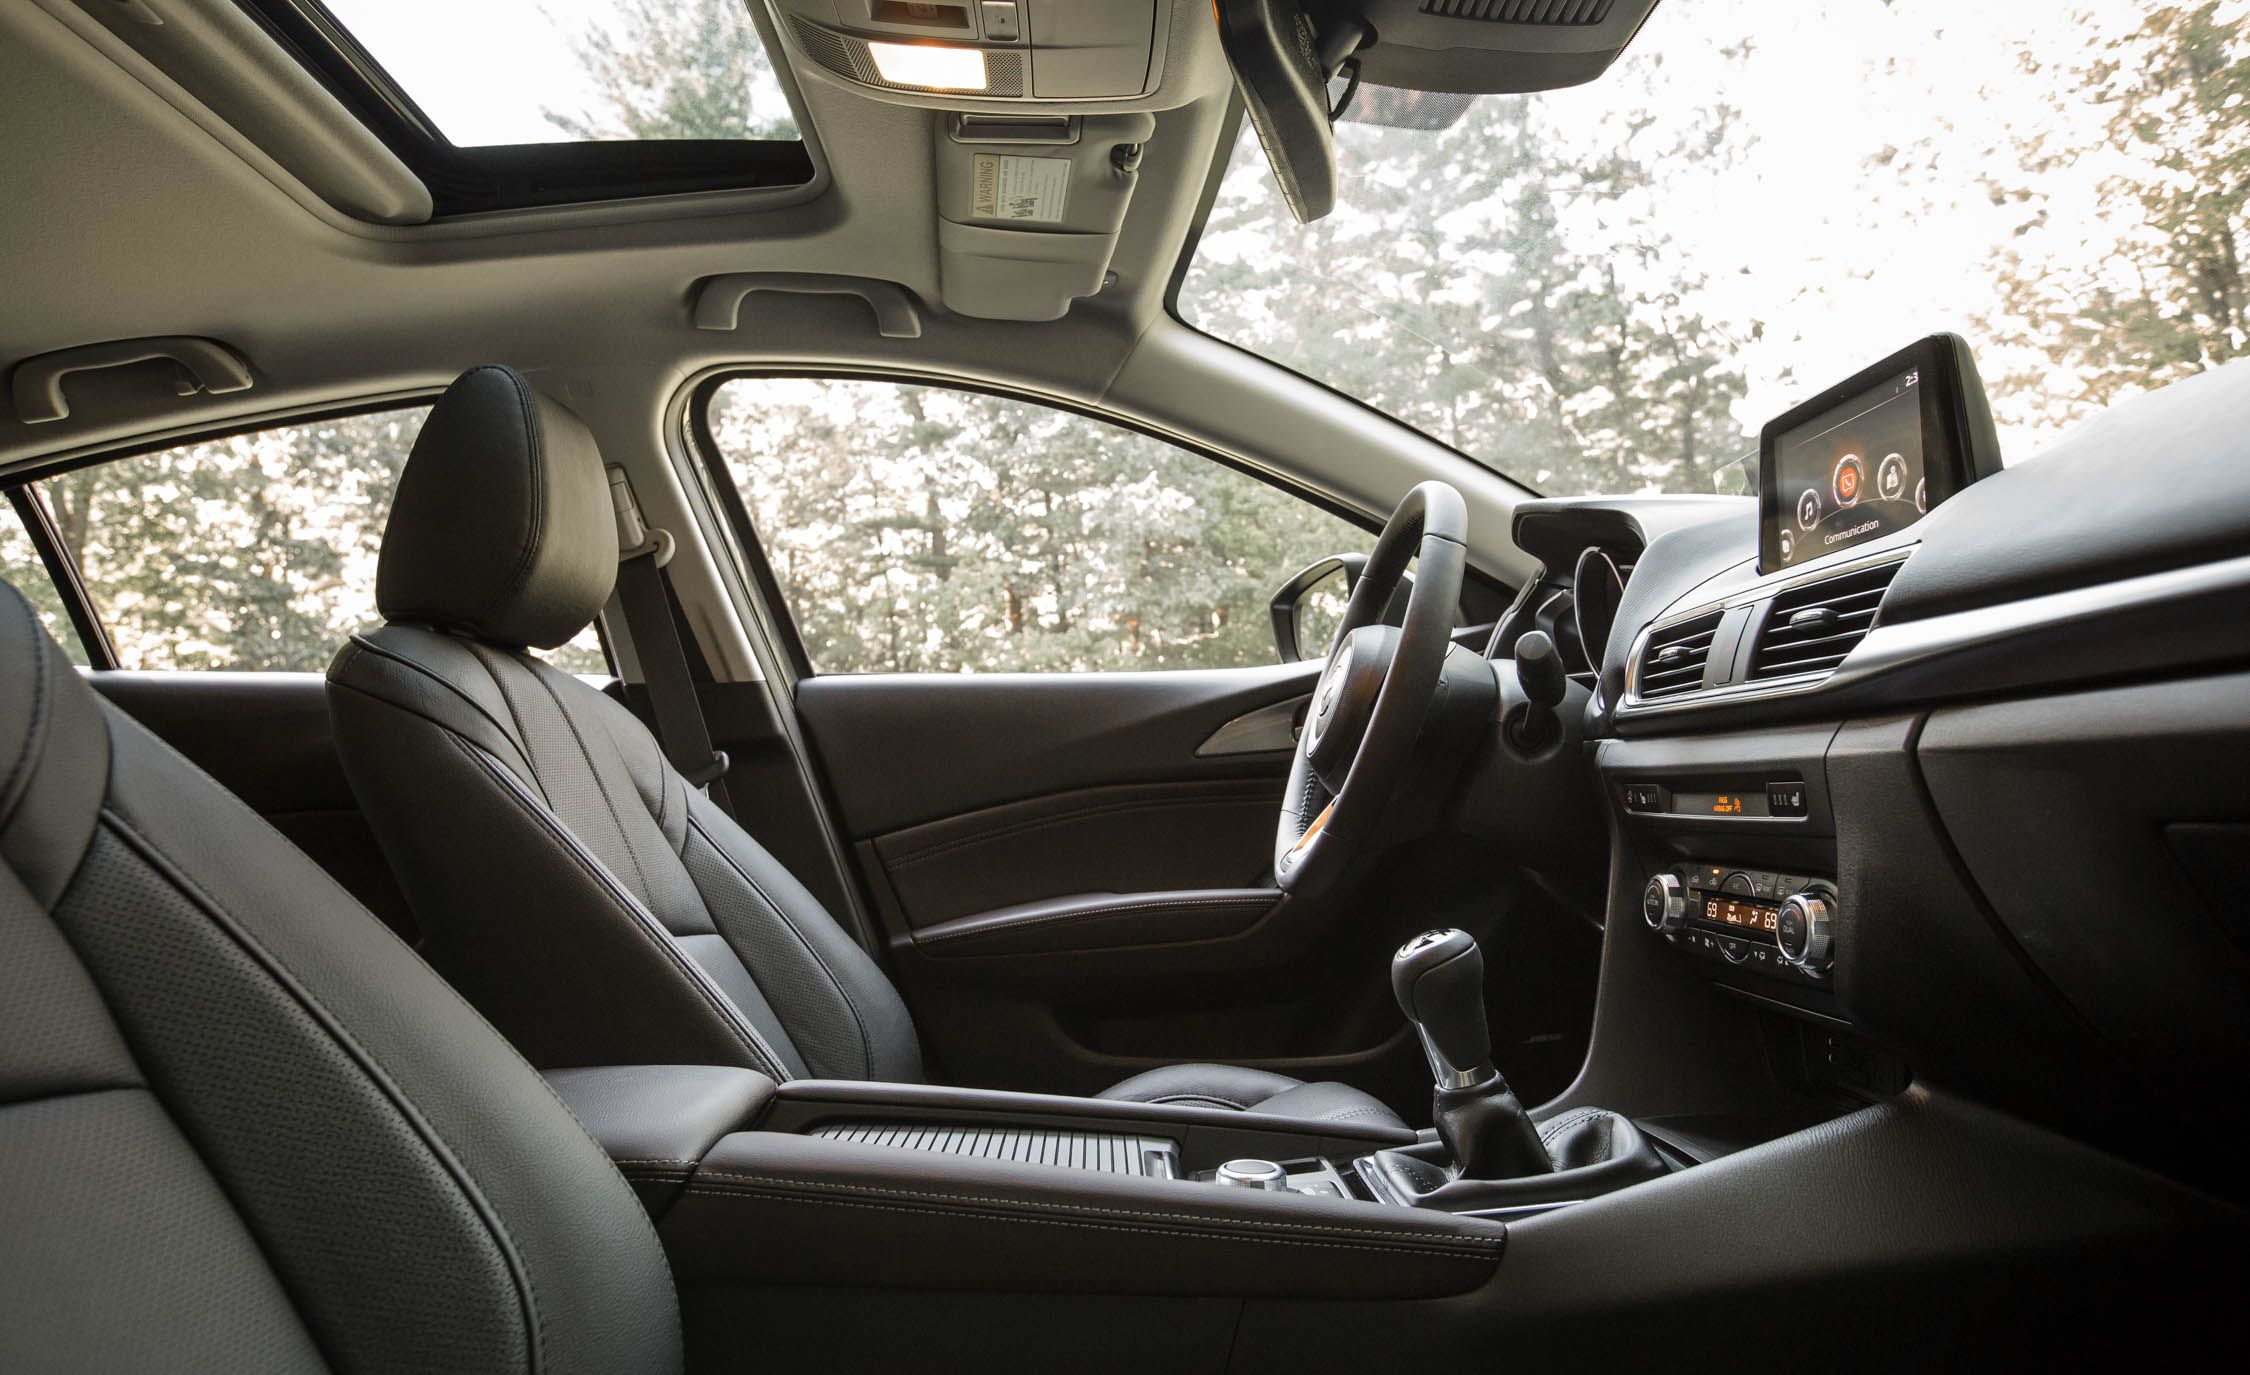 2017 Mazda3 Hatchback Interior Seats Cockpit (View 34 of 40)